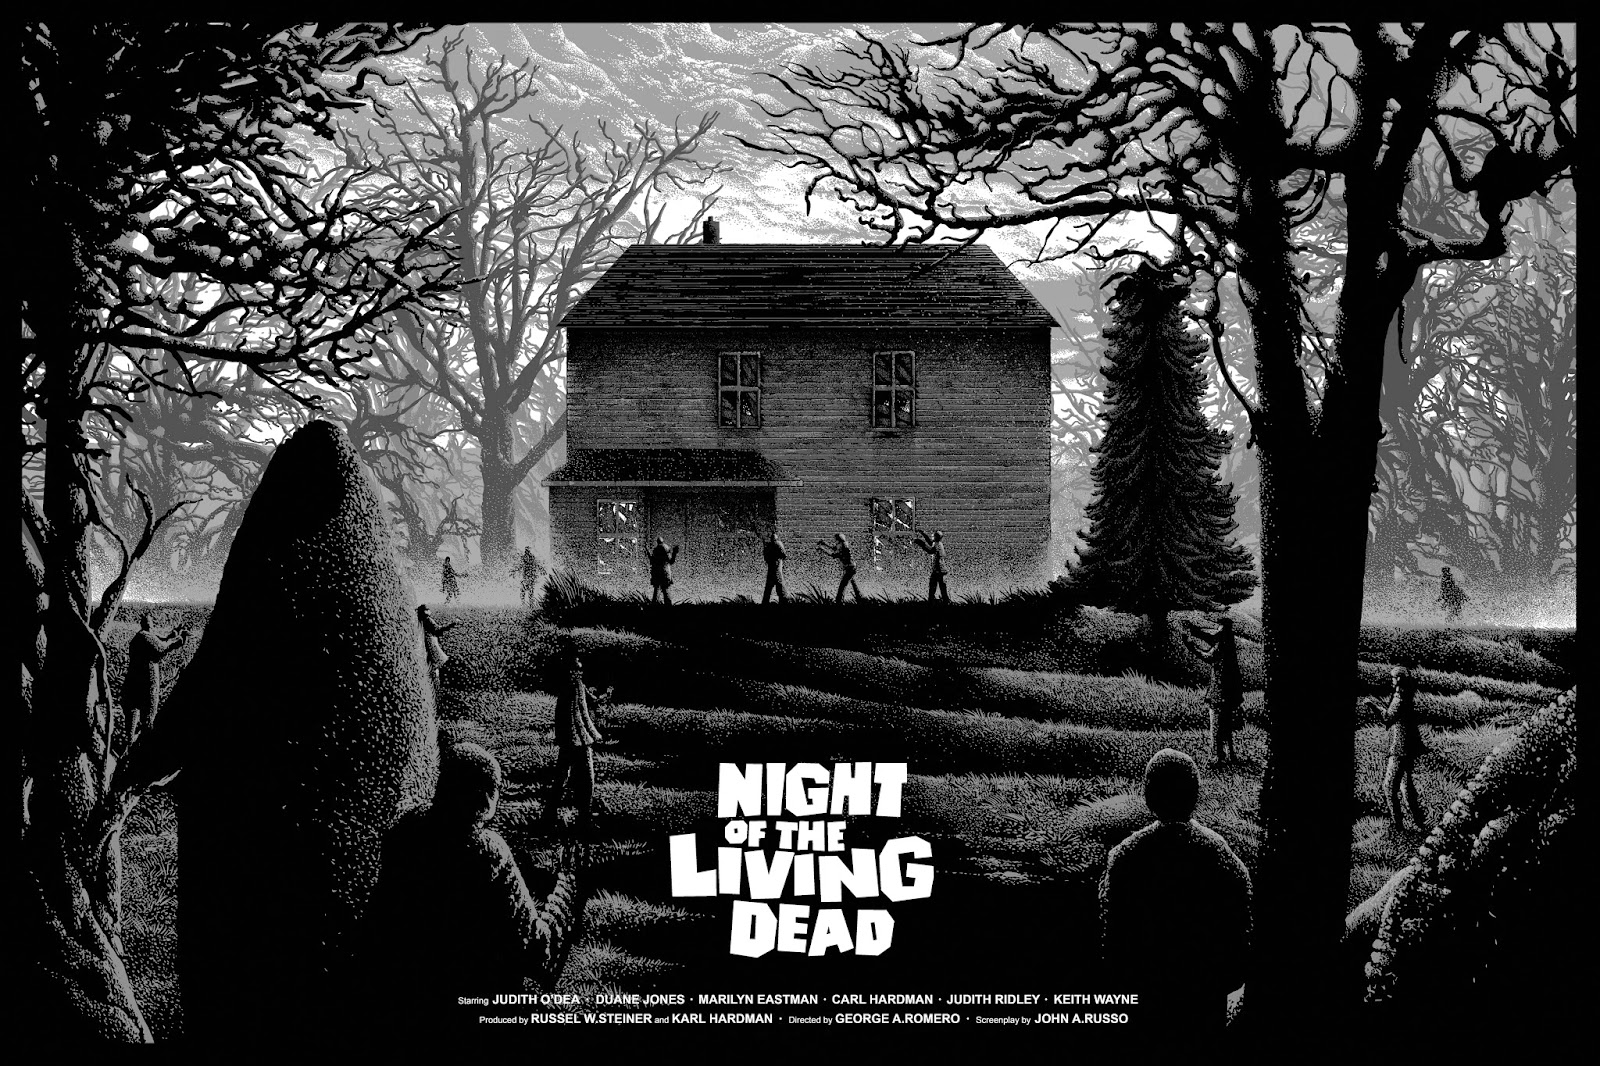 Night-of-the-Living-Dead-Kilian-Eng-Poster-Variant-Movie.jpg